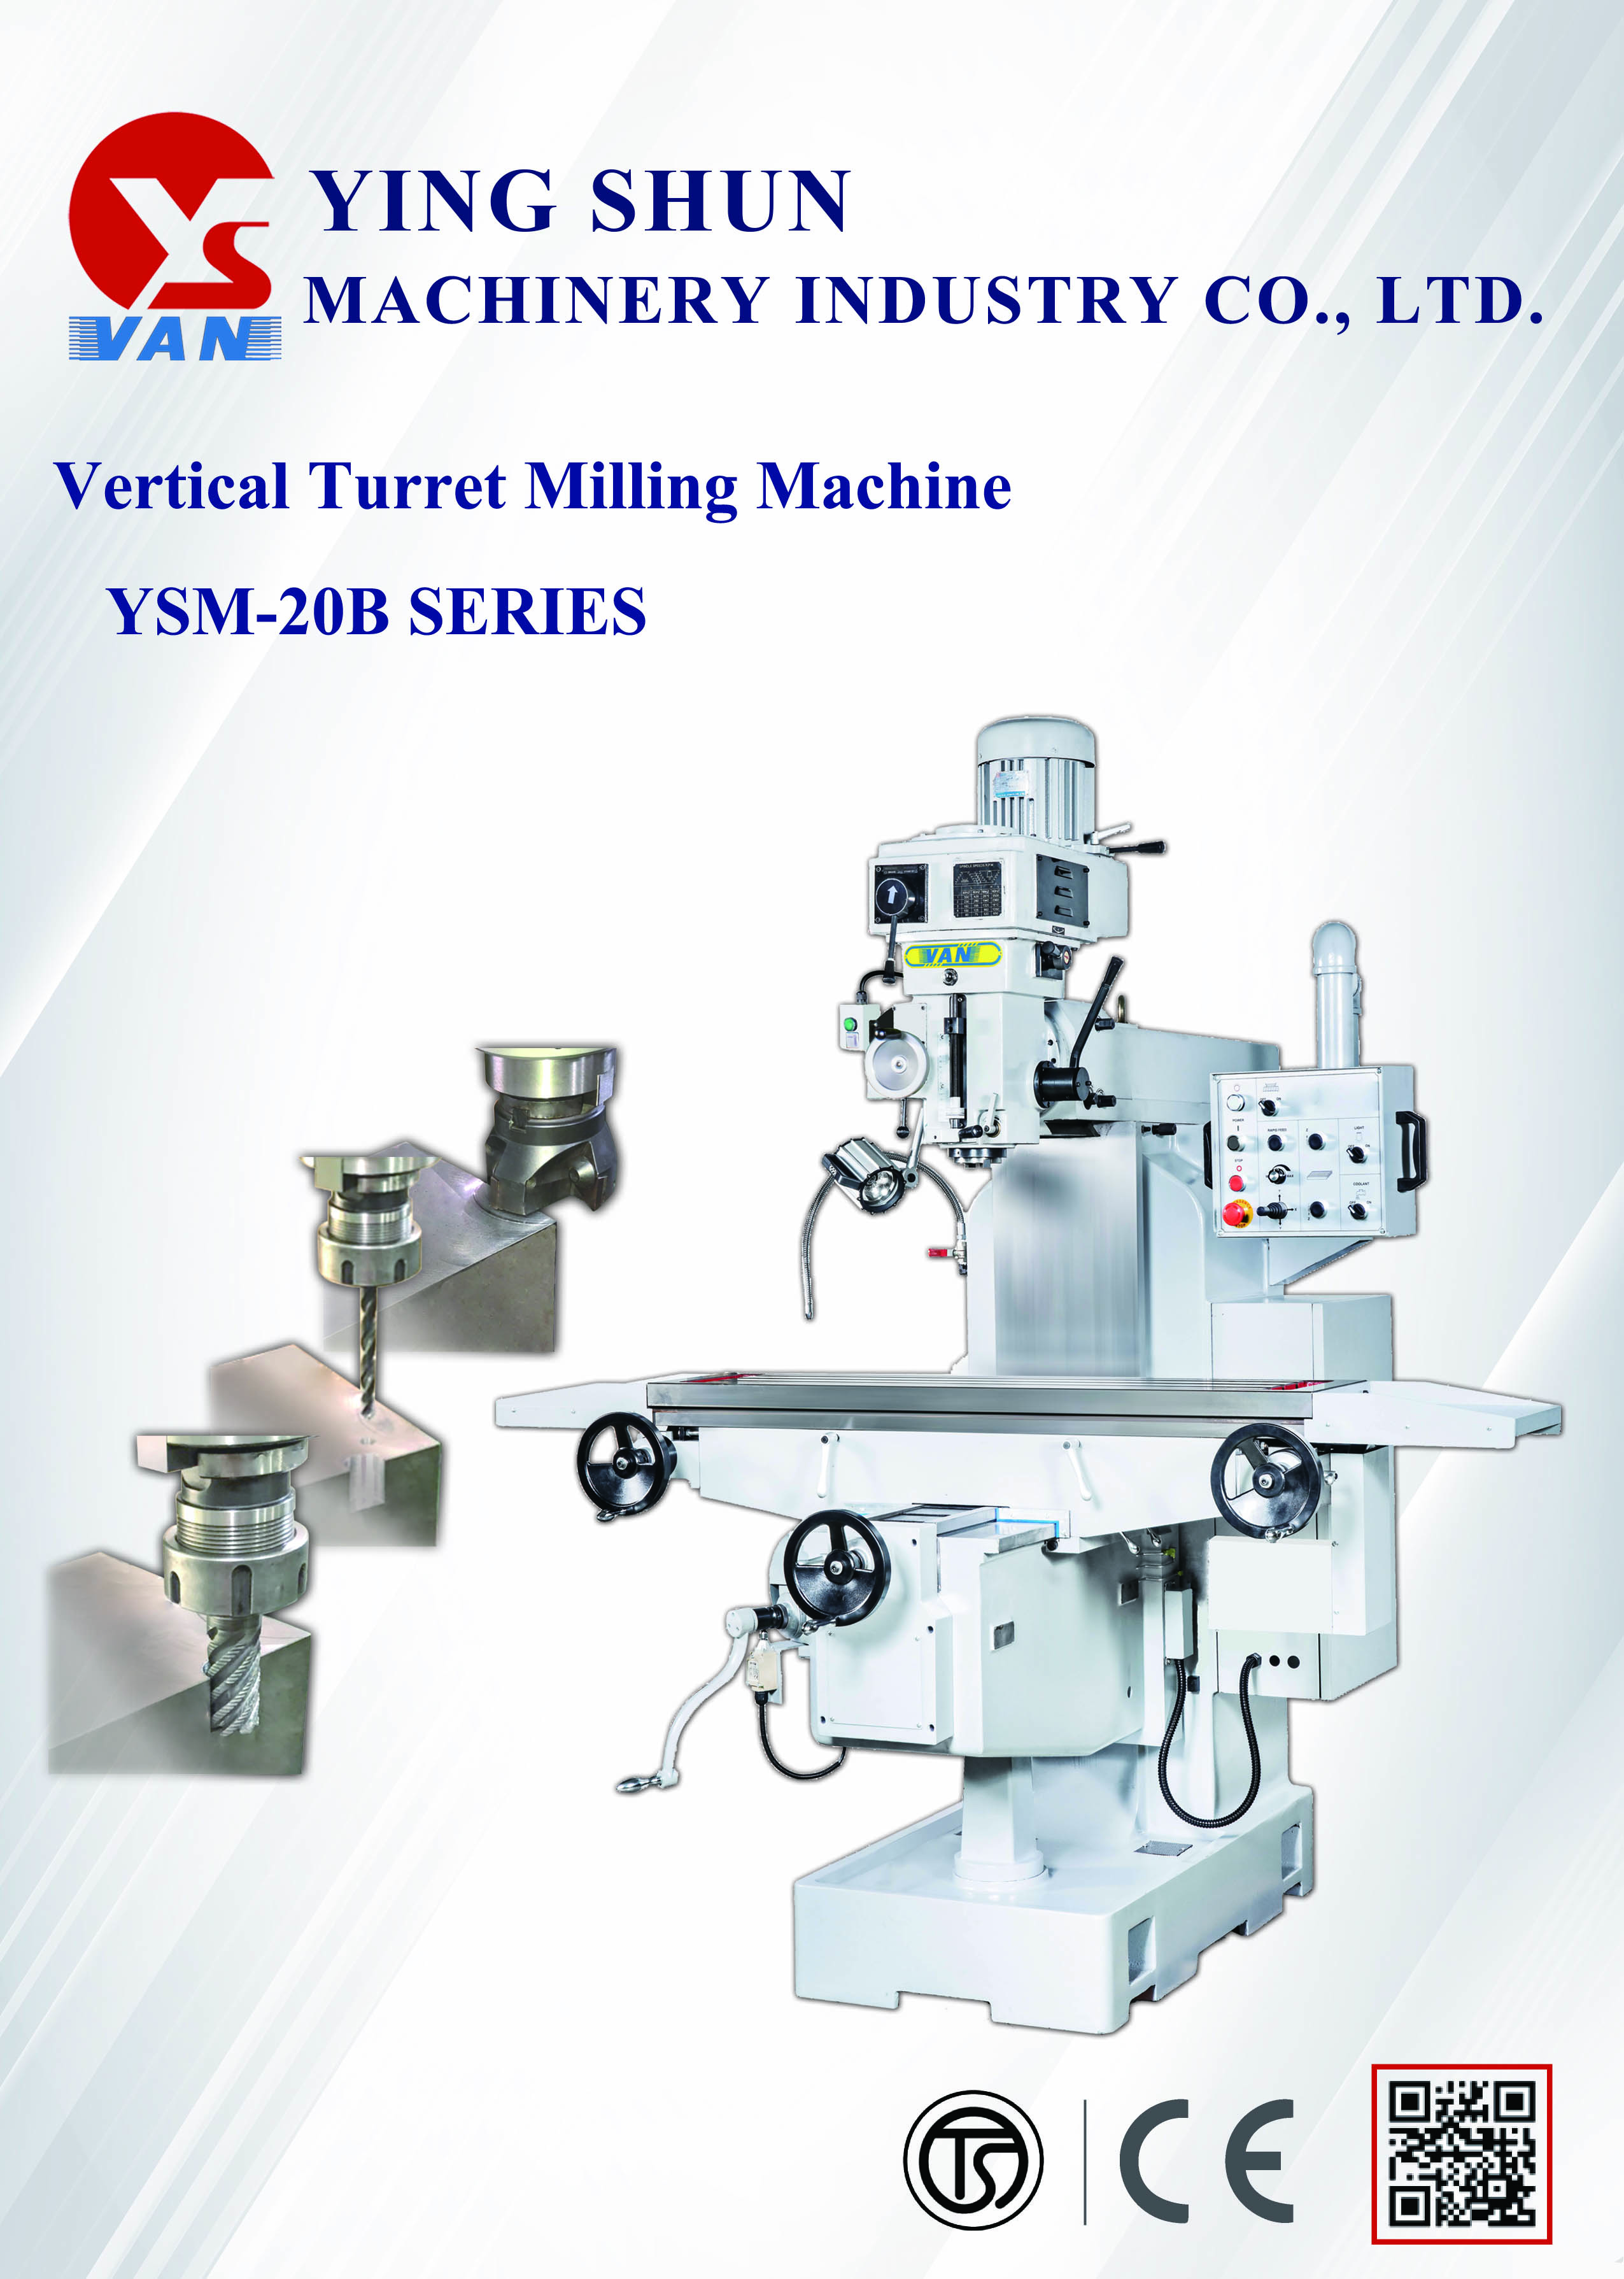 Catalog|YSM-20B series catalog